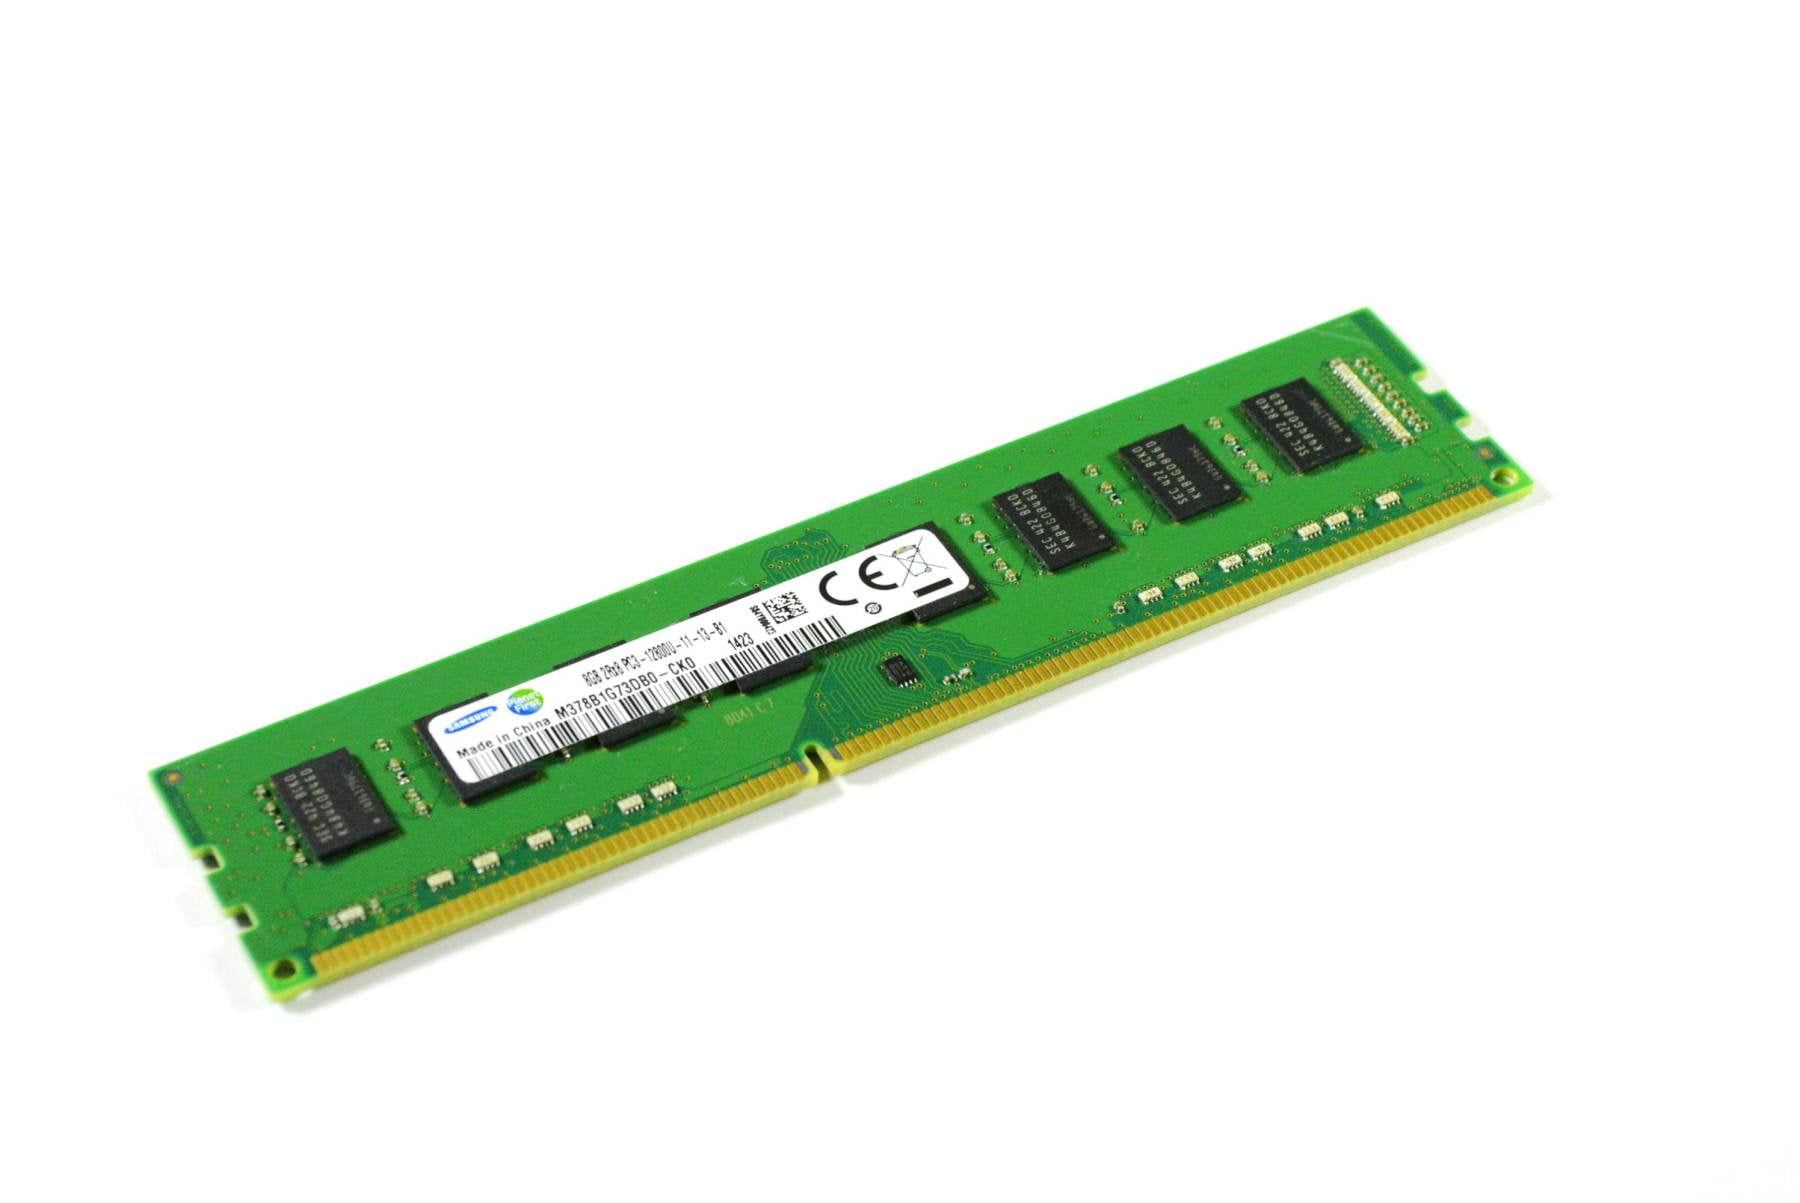 ™ Ssamsung 8GB 2Rx8 DDR3 PC3-12800U 1600MHz Memory Ram M378B1G73EB0 